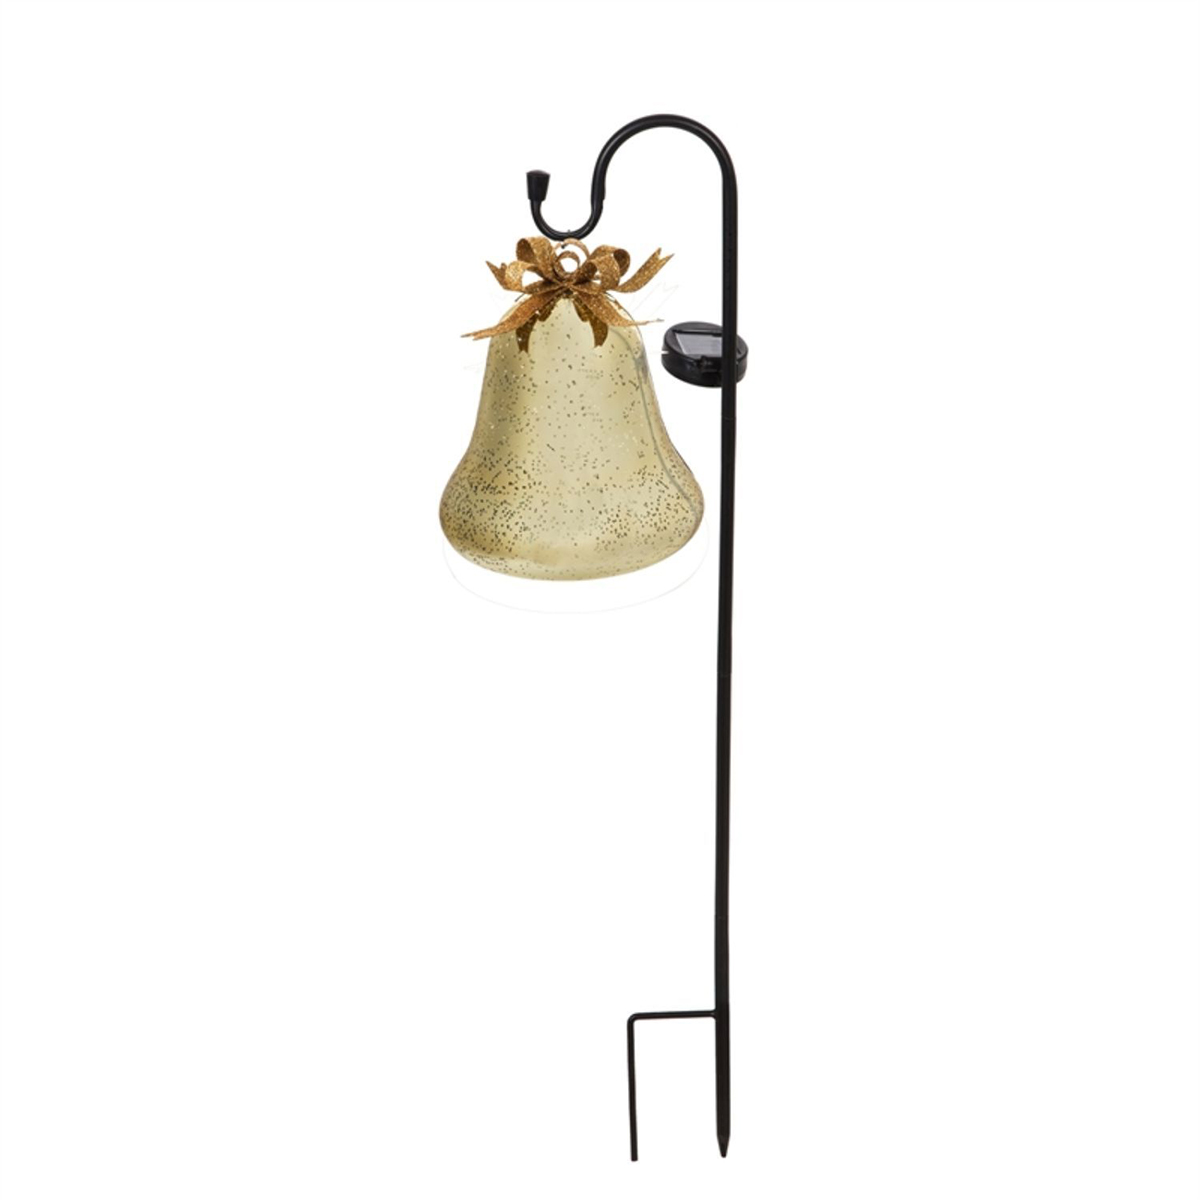 Evergreen Lighted Bell with Shephard’s Hook